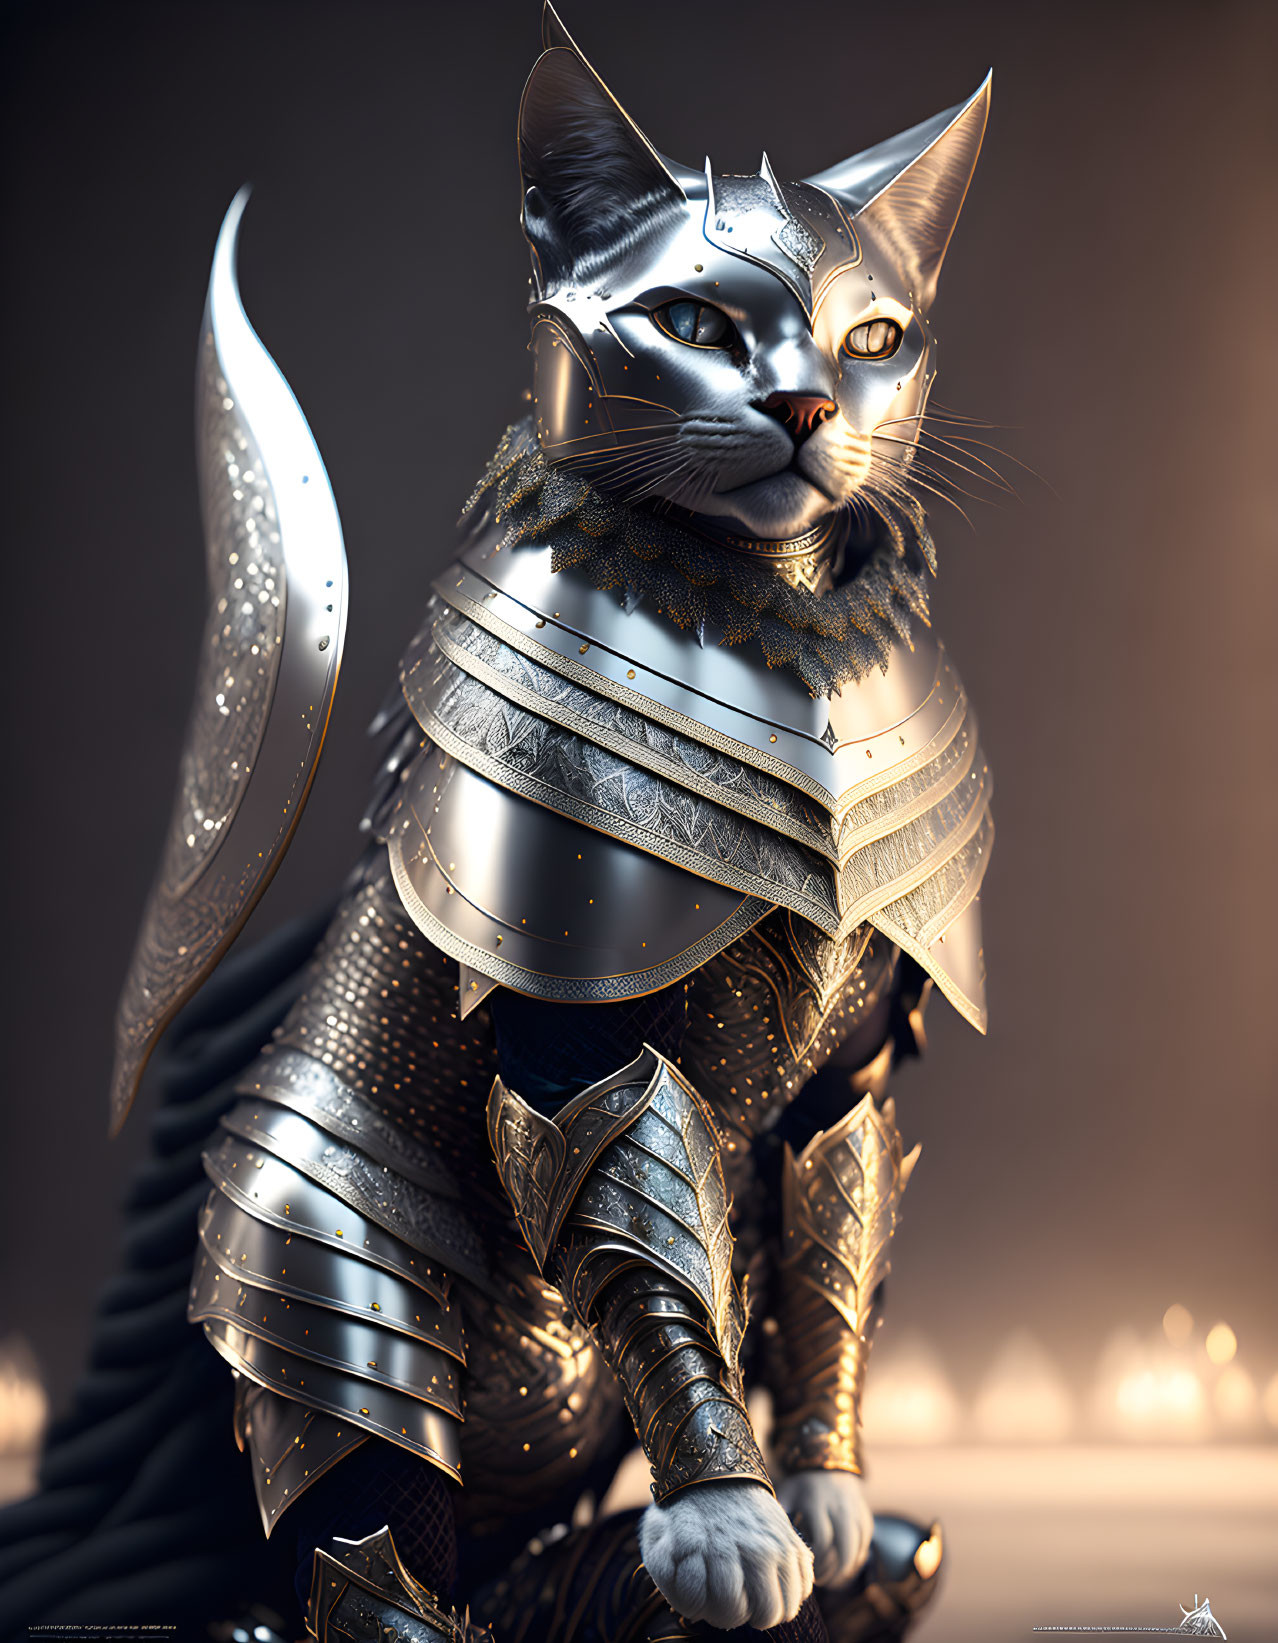 Fantasy armor-clad cat in regal pose on soft-lit backdrop